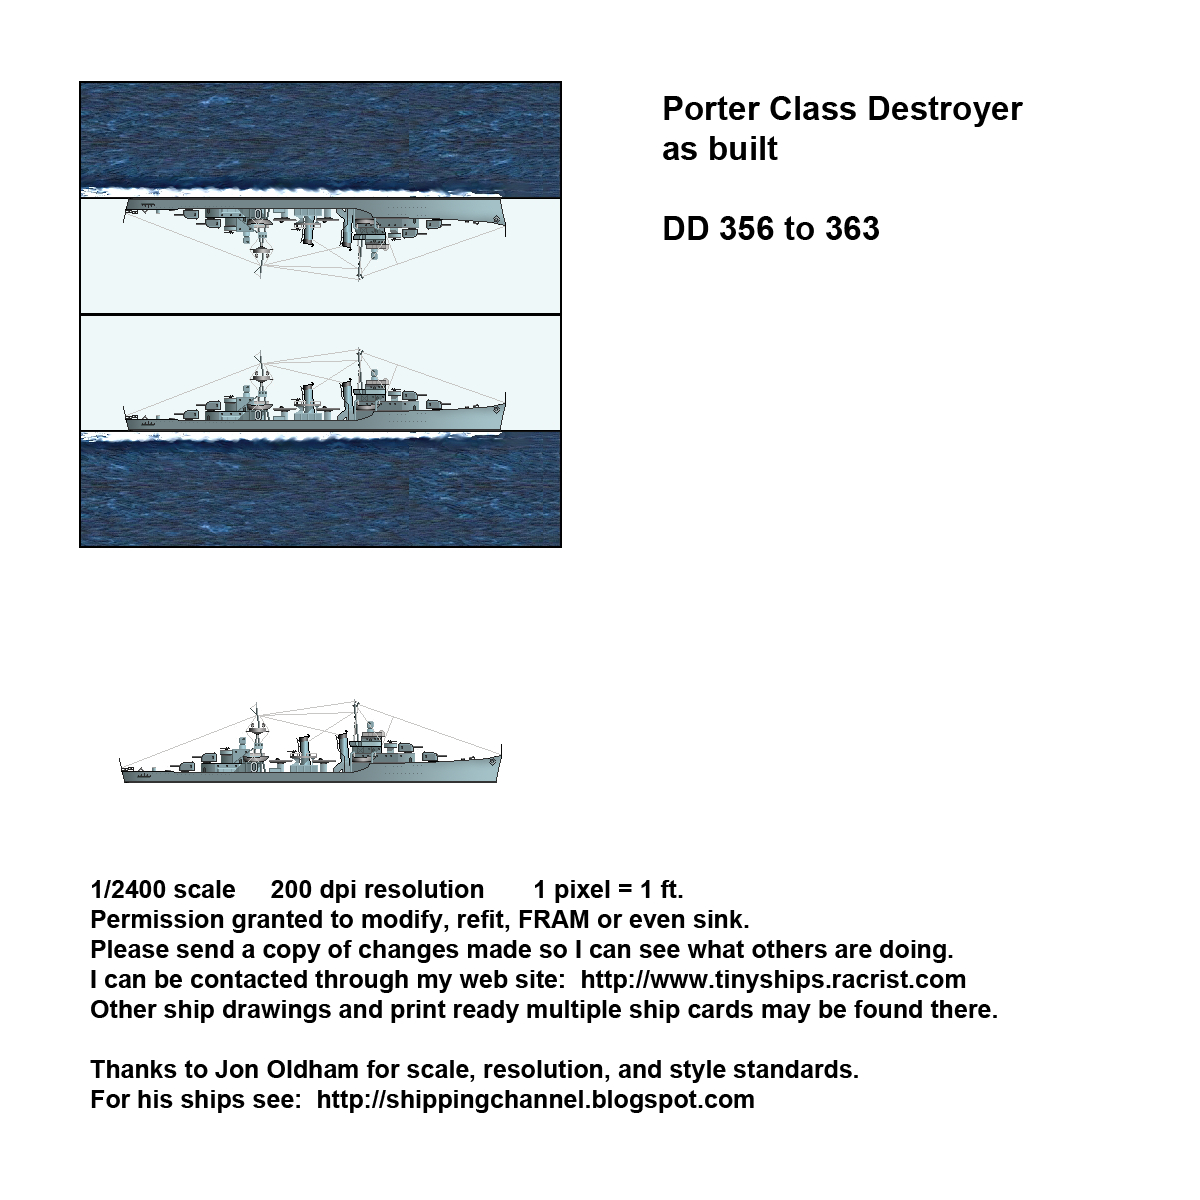 US Porter Class Destroyer